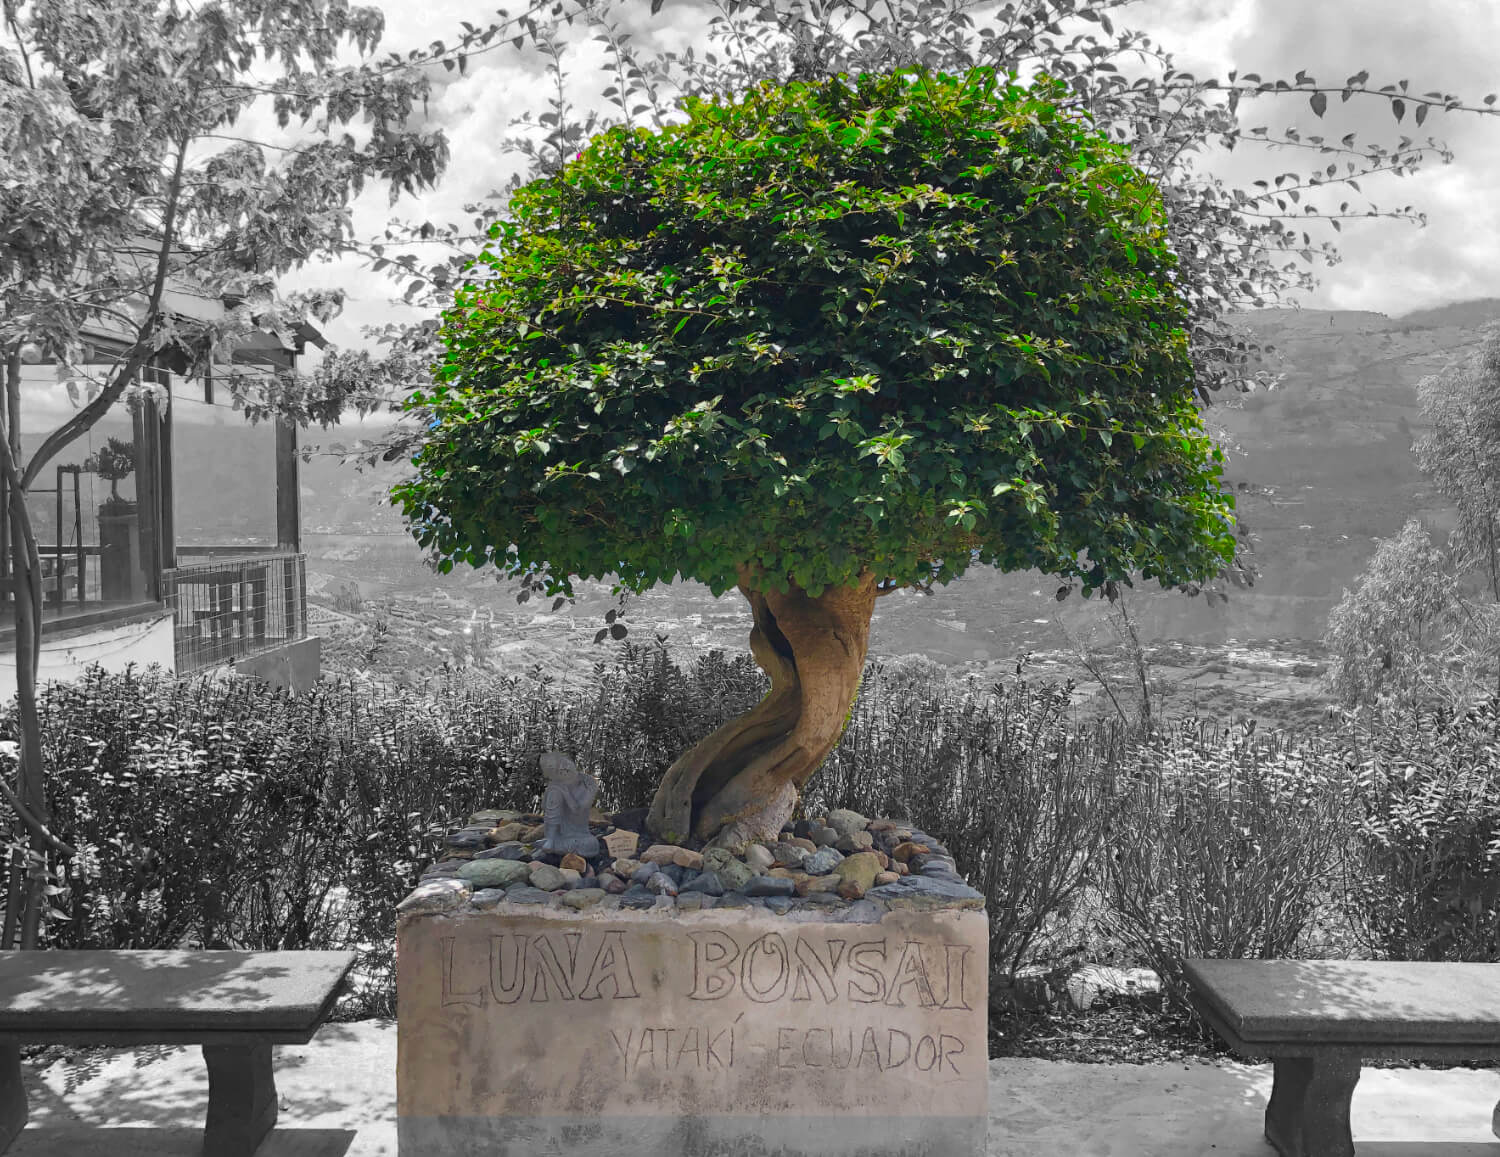 luna bonsai, arbol bonsai mas antiguo del ecuador